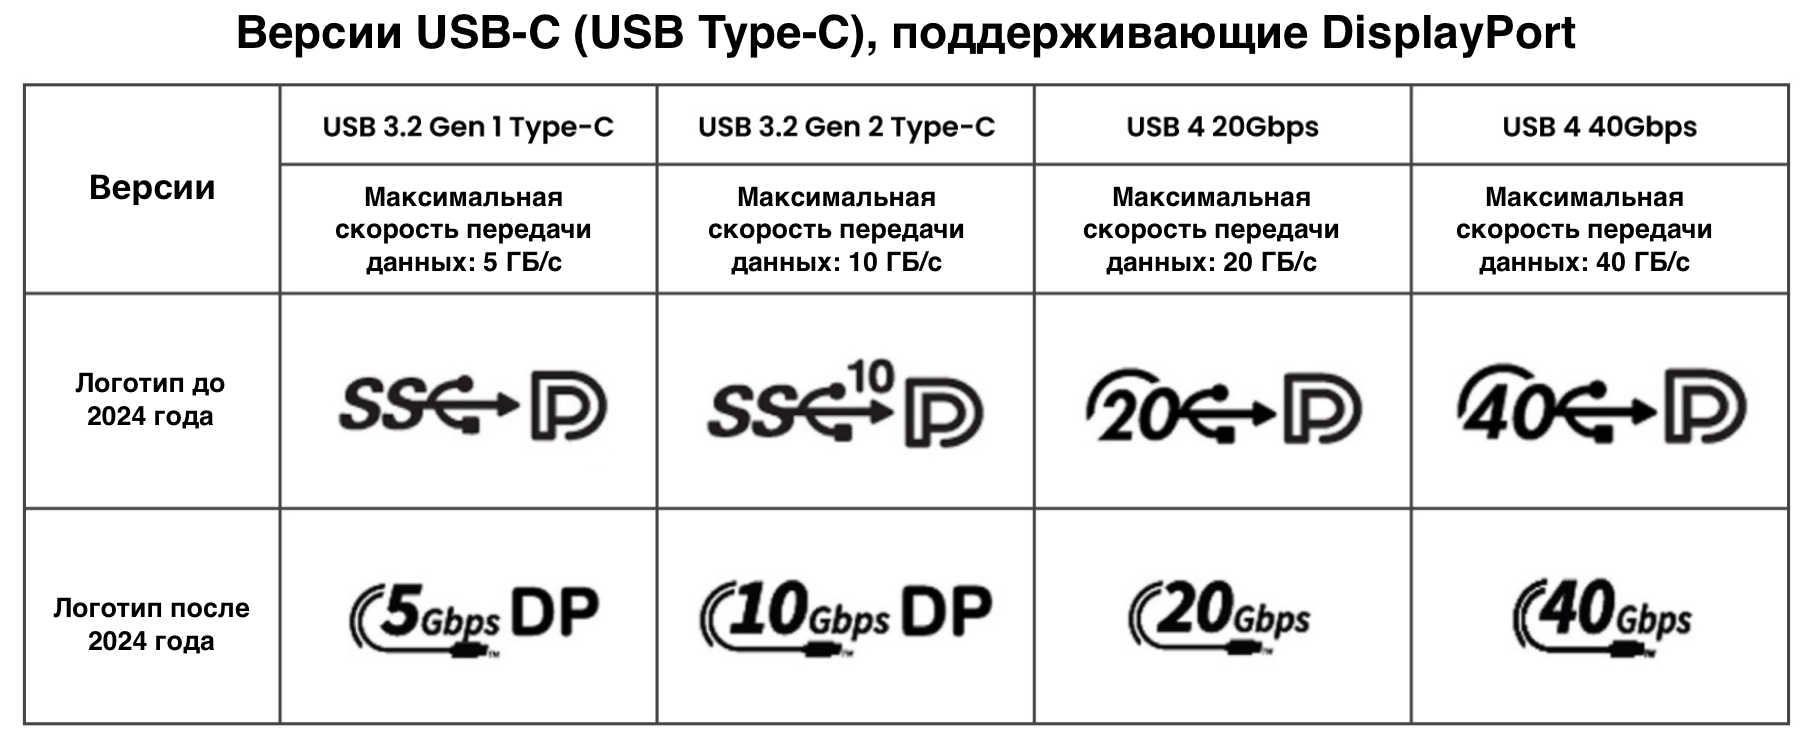 Distinguishing USB-C (USB Type-C) versions that support DisplayPort Alternative Mode (DP Alt Mode) from the logo